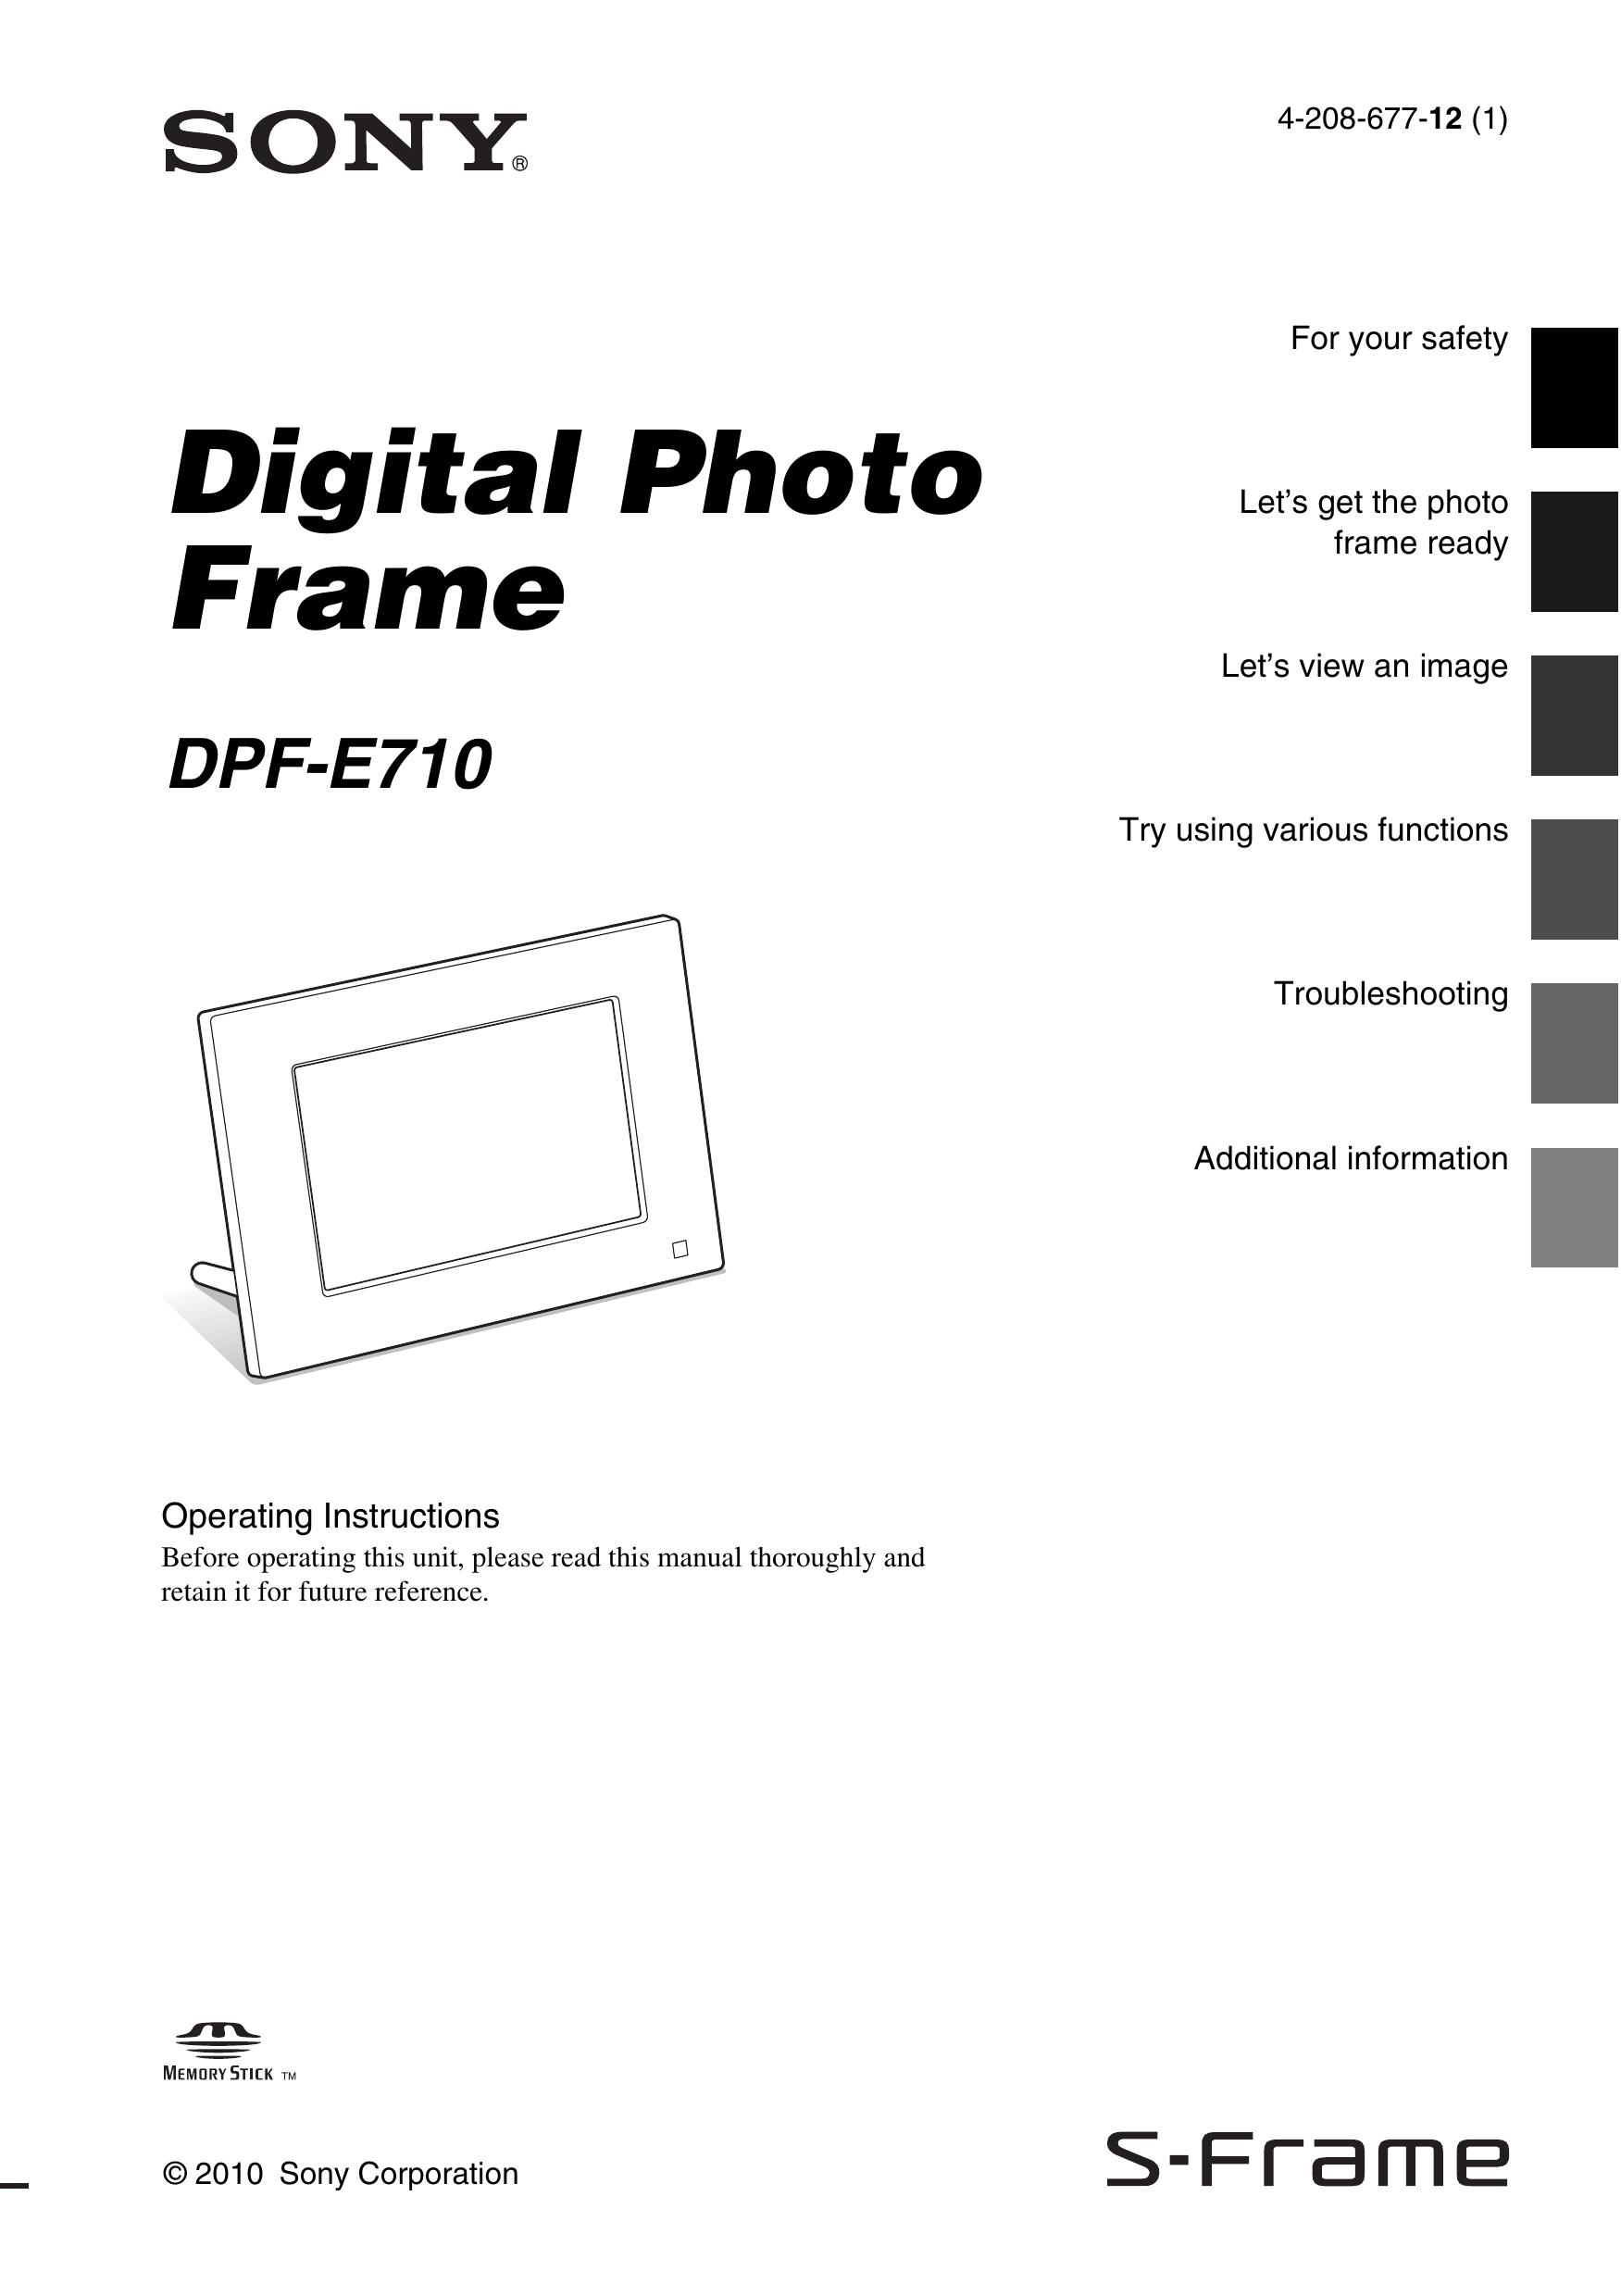 Sony DPF-E710 Digital Photo Frame User Manual